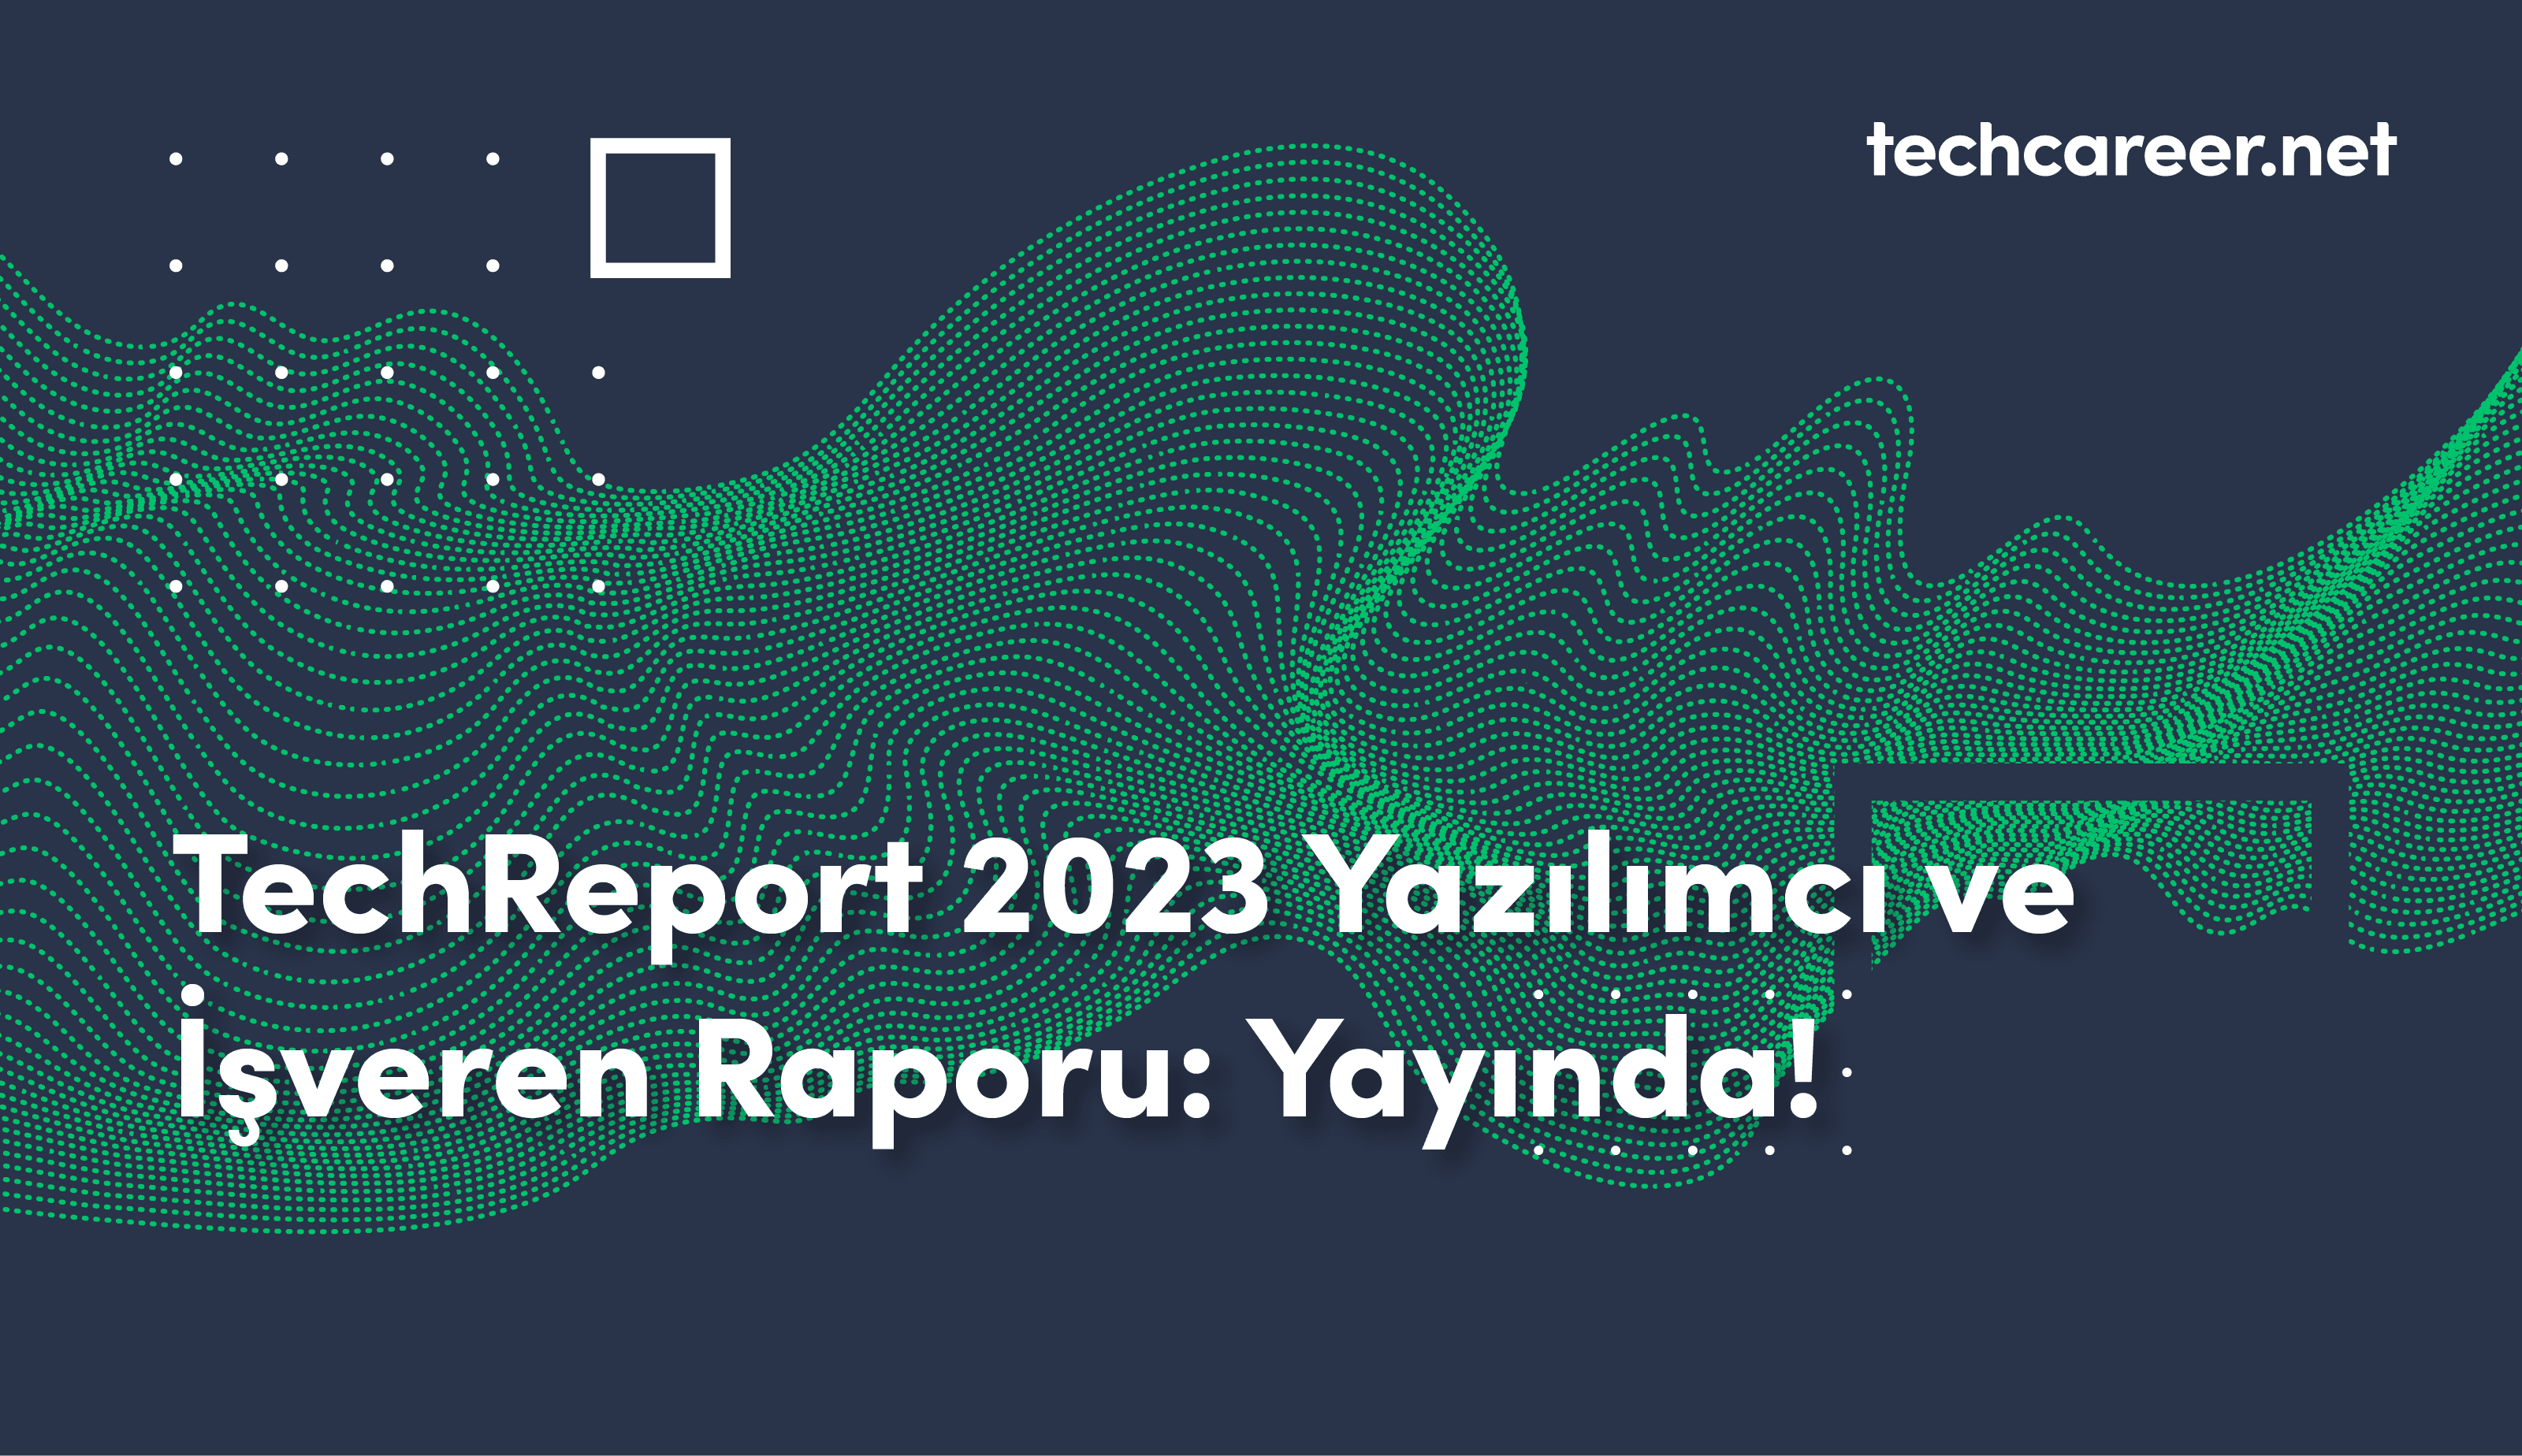 TechReport 2023 Developer and Employer Report